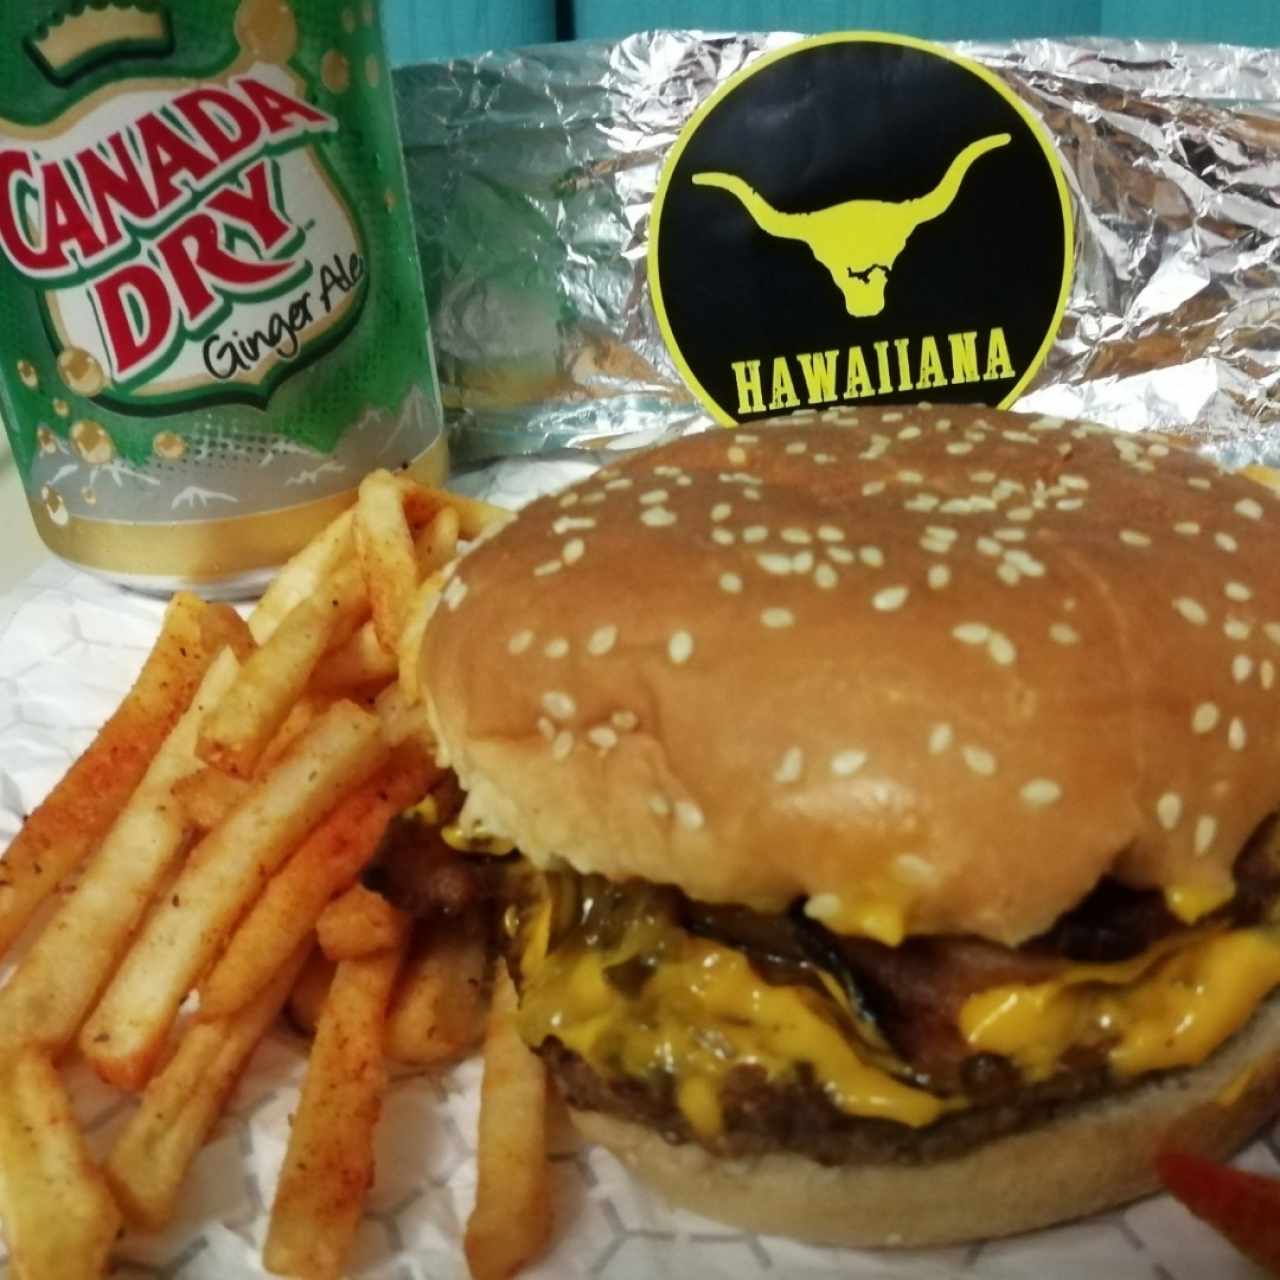 Combo - hamburguesa hawaiiana + papas fritas + soda